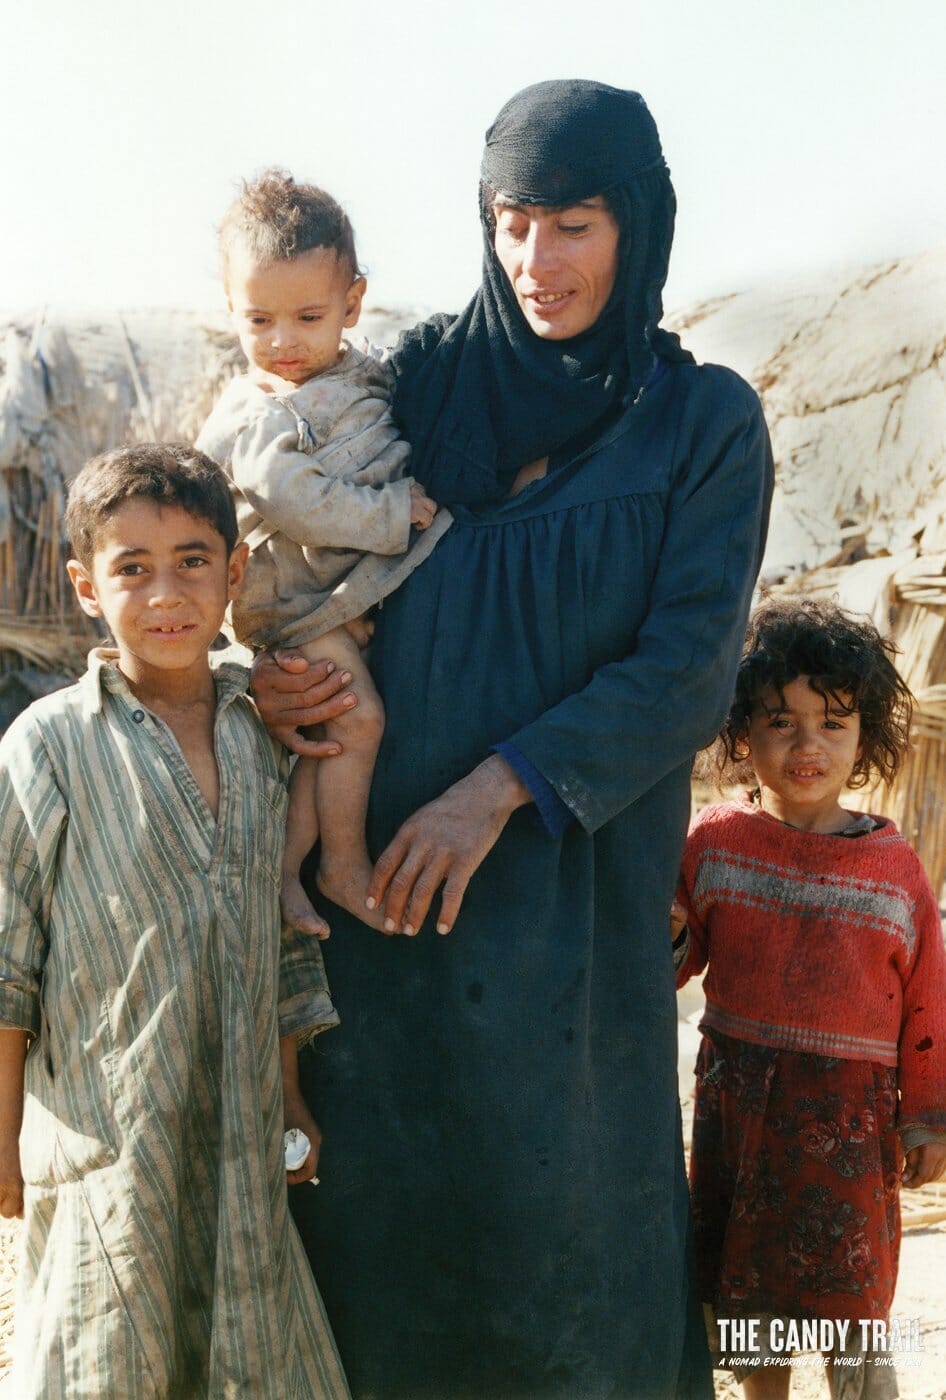 shia iraq marsh arab woman and kids 1989